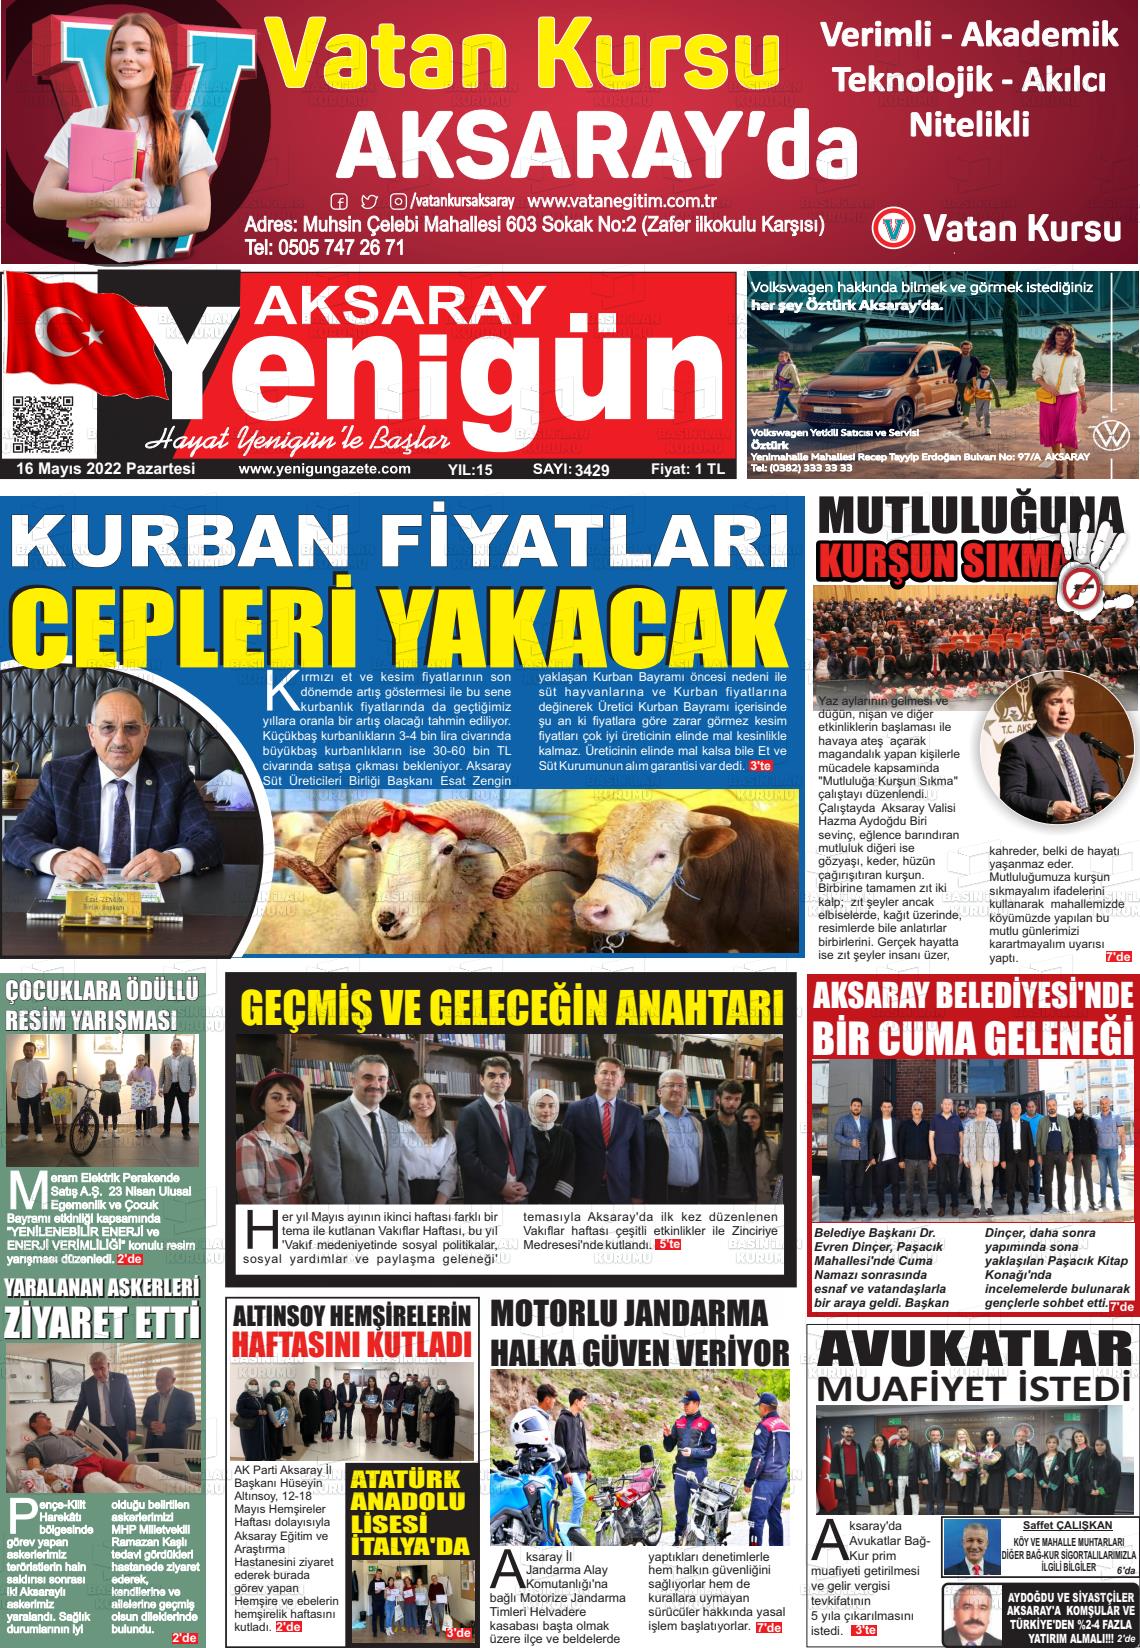 16 Mayıs 2022 Yenigün Gazete Manşeti